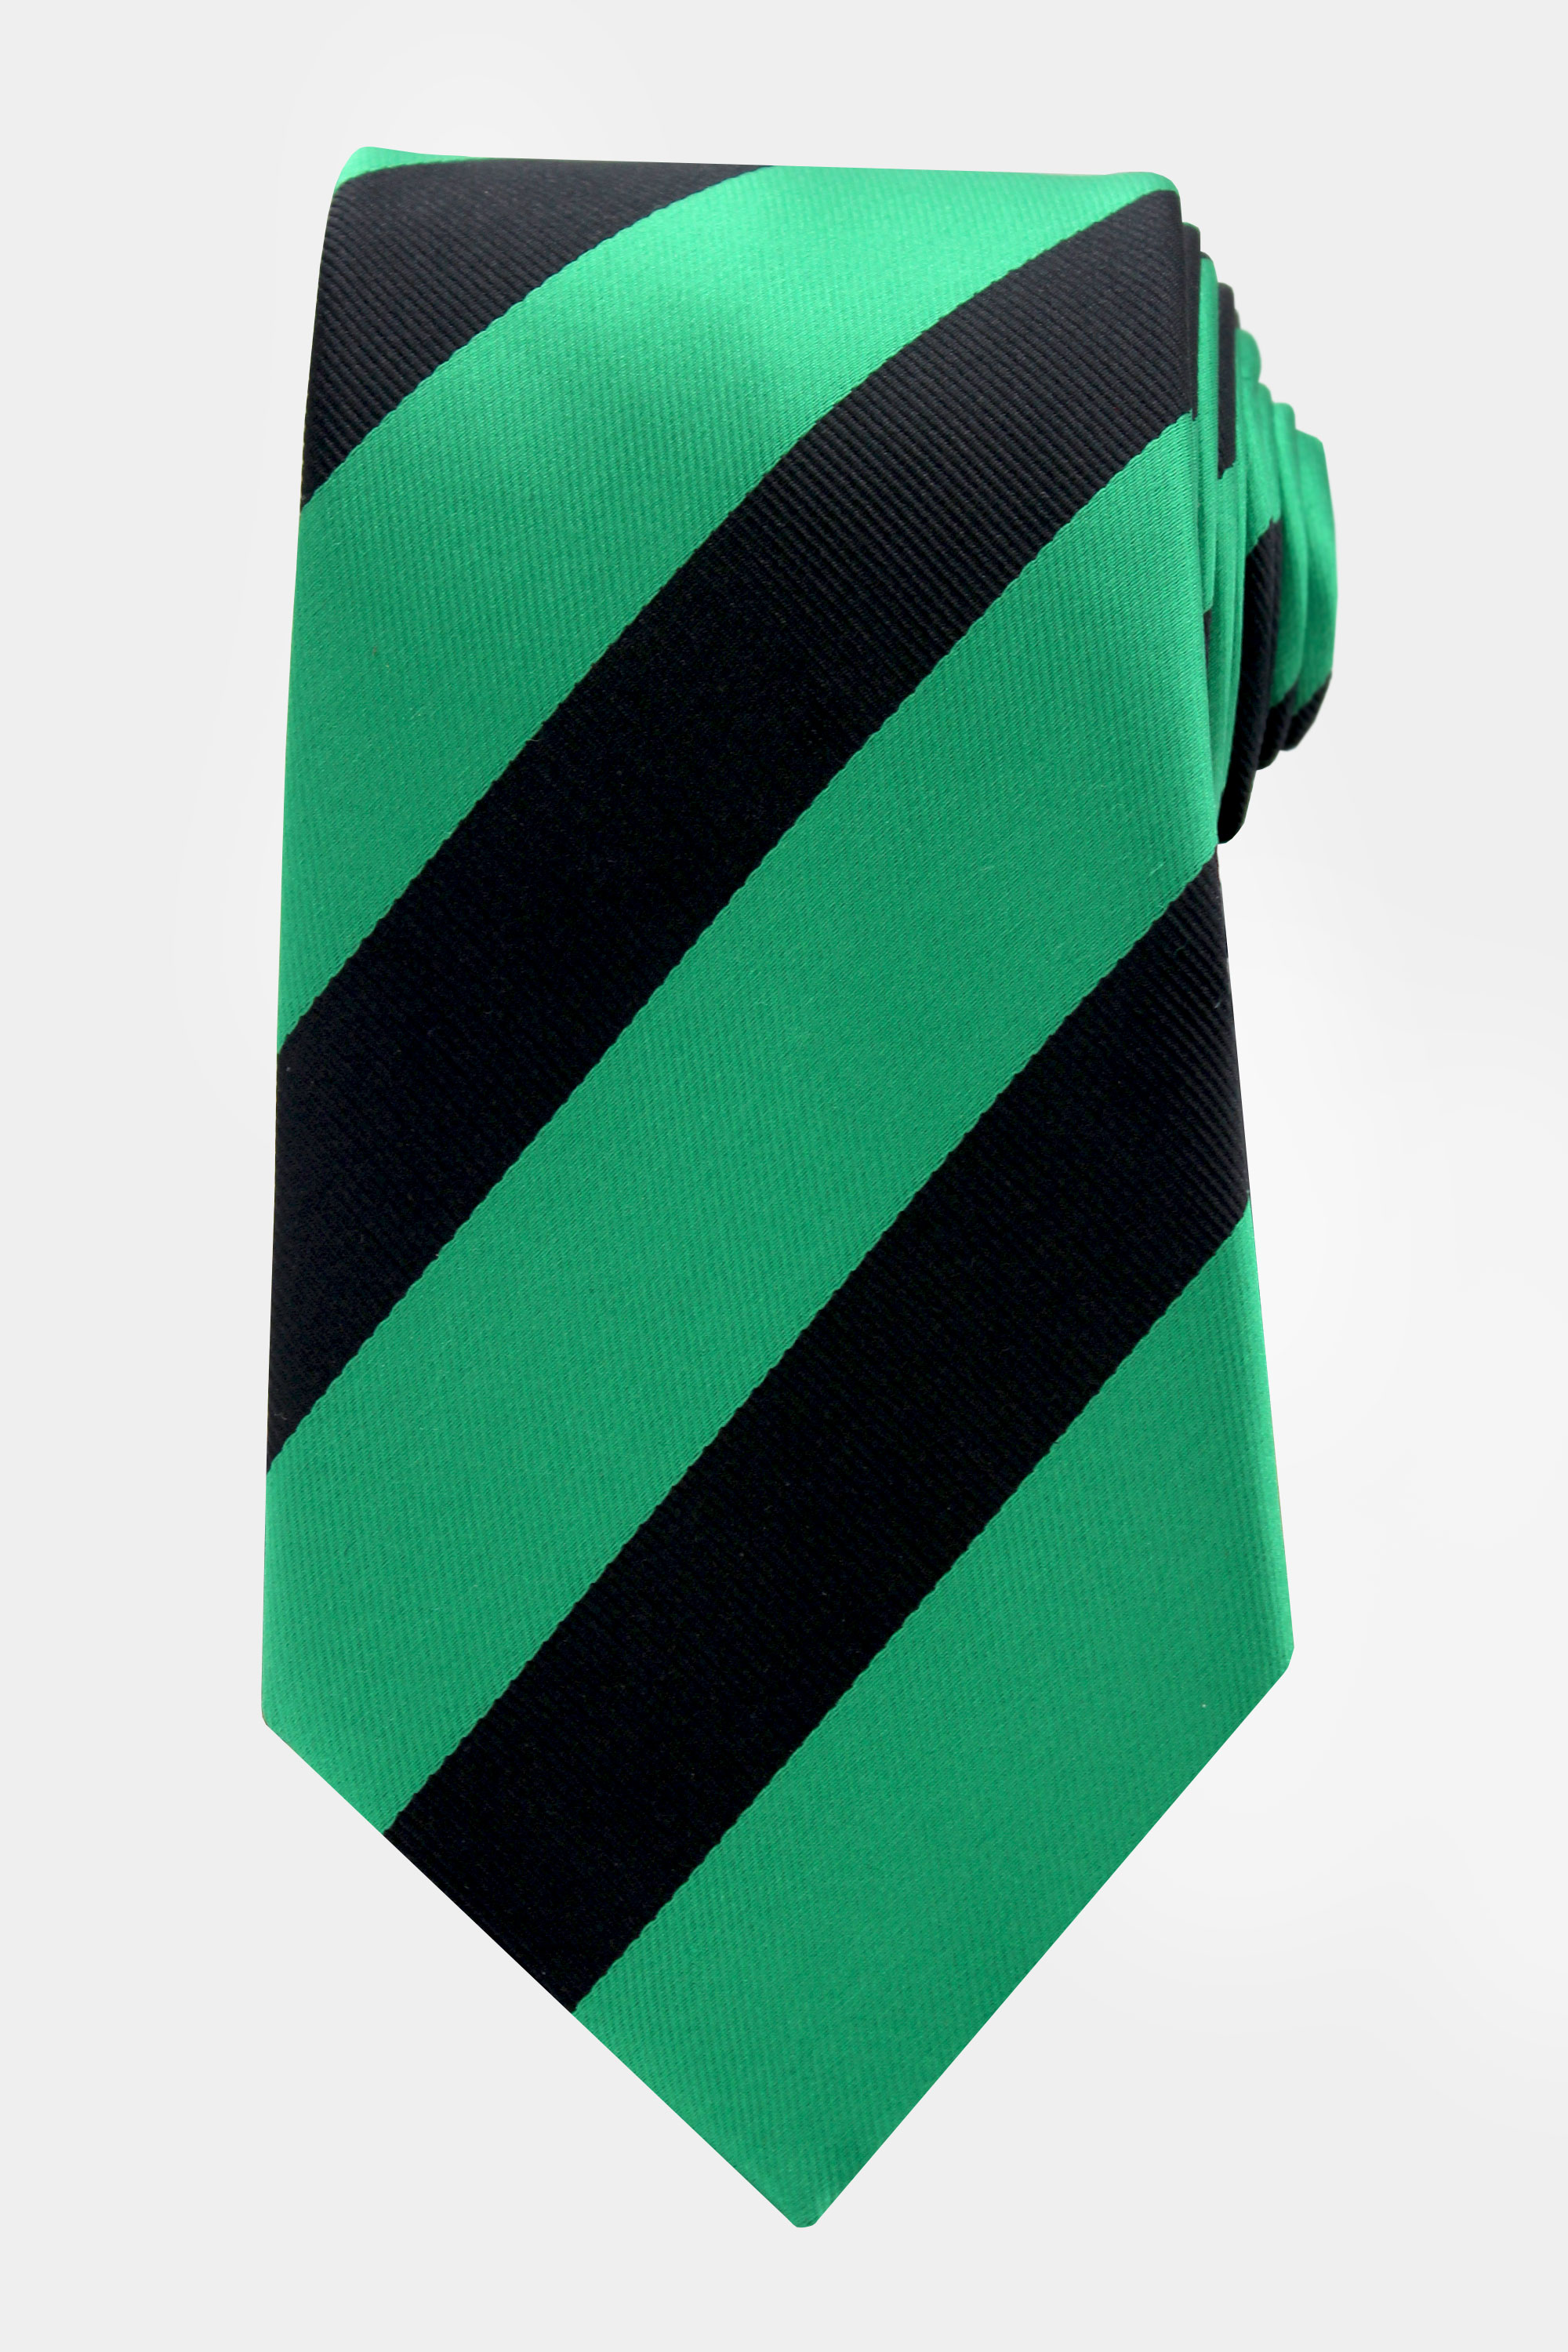 Emerald-Green-and-Black-Striped-Tie-from-Gentlemansguru.com